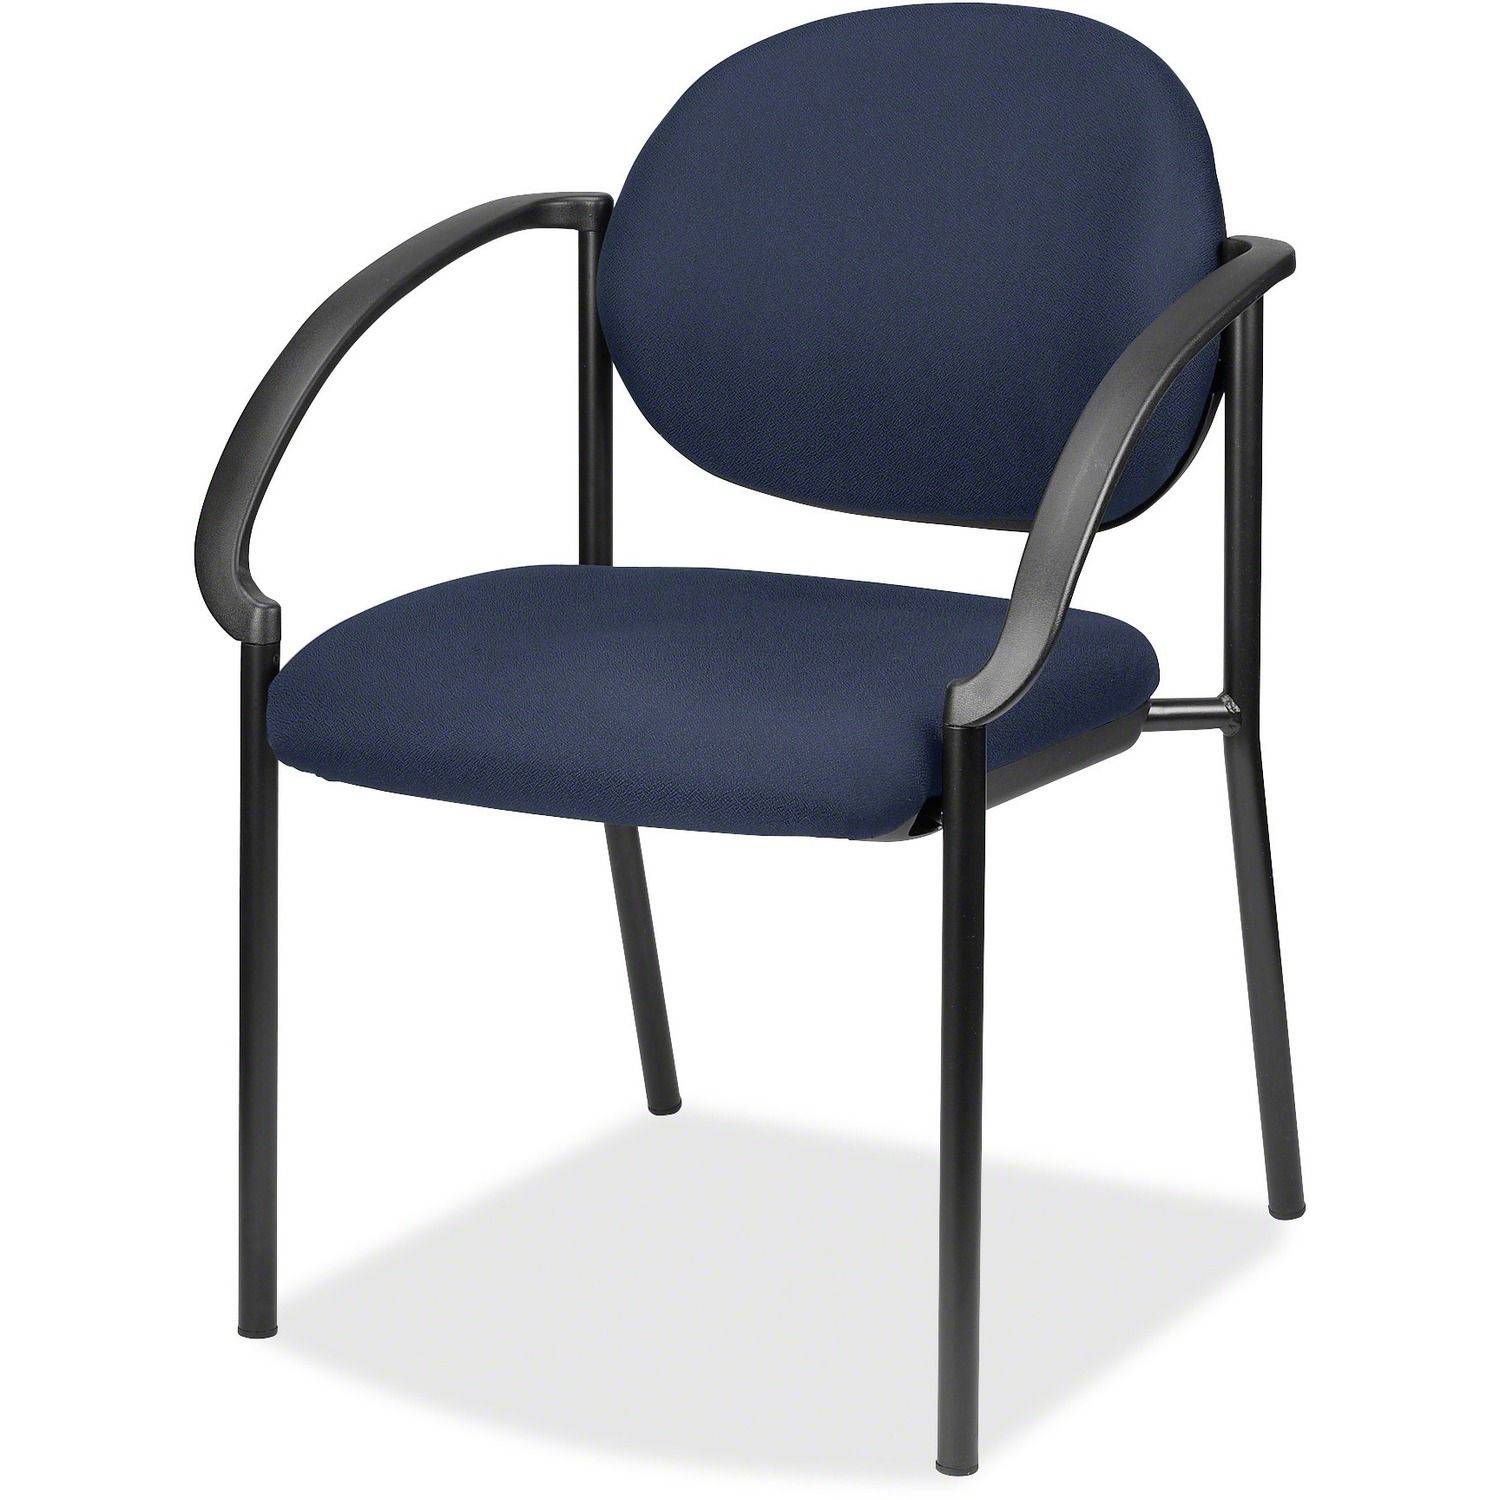 Dakota 9011 Stacking Chair Blueberry Fabric Seat, Blueberry Fabric Back, Steel Frame, Four-legged Base, 1 Each